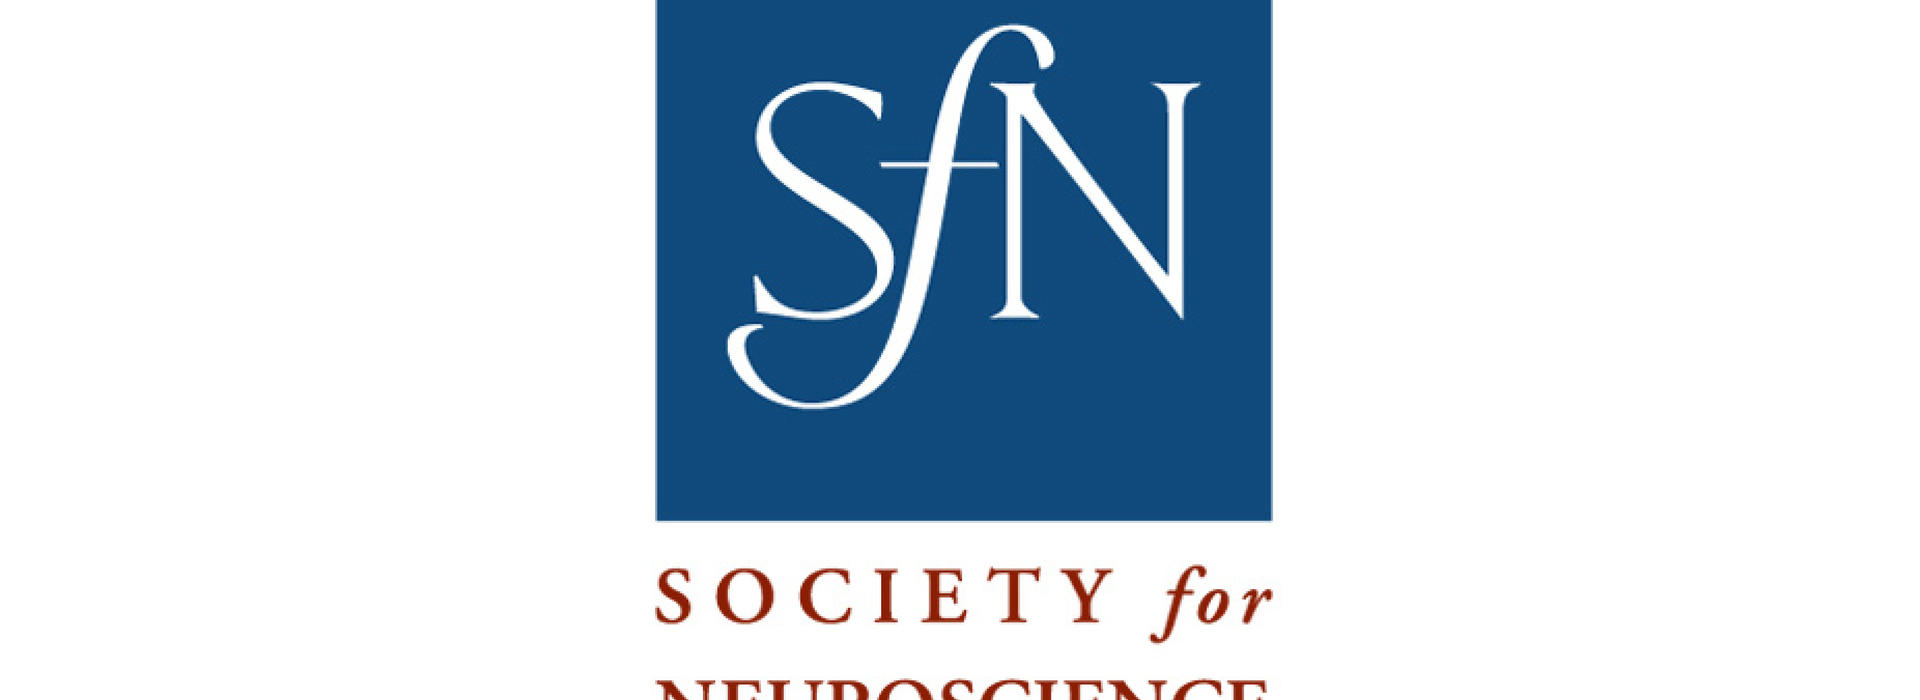 sfn logo